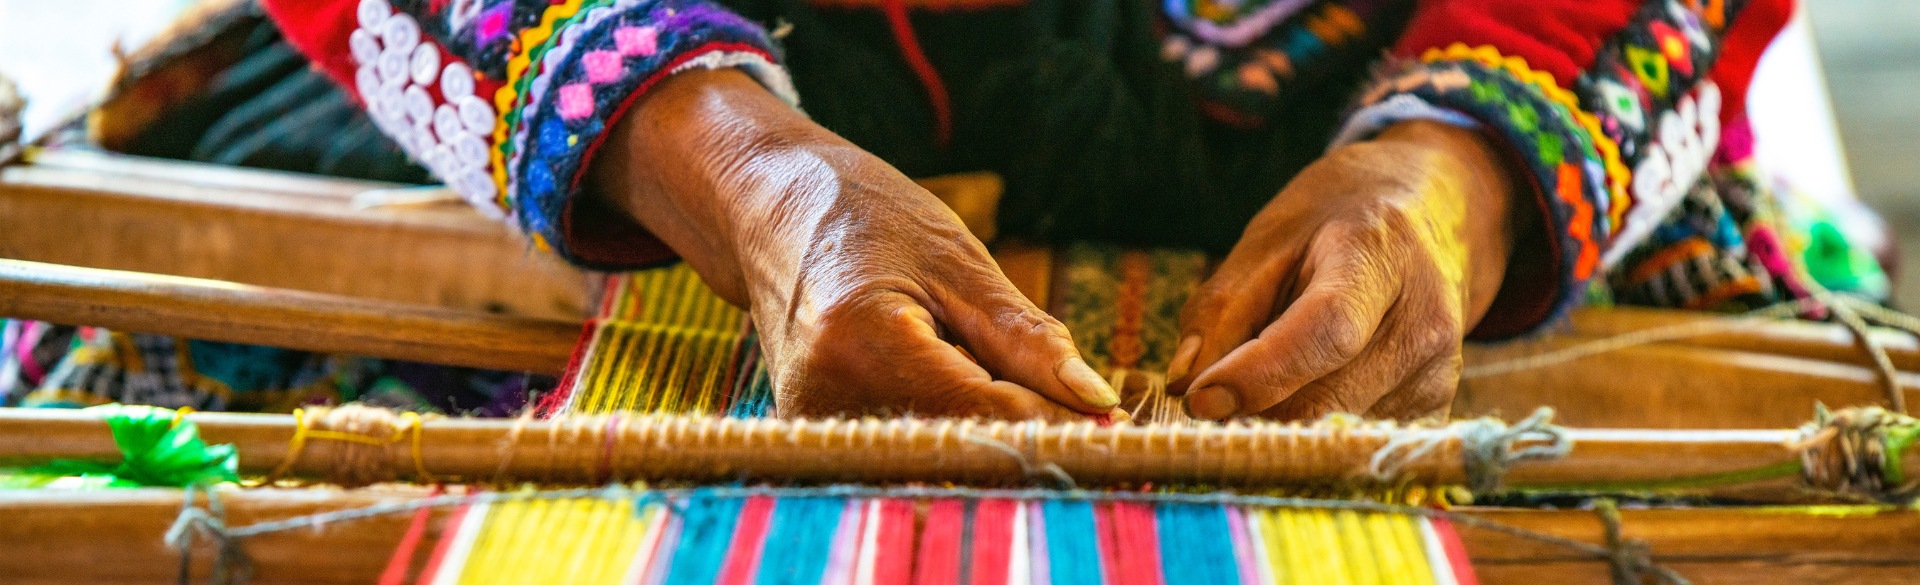 Person weaving